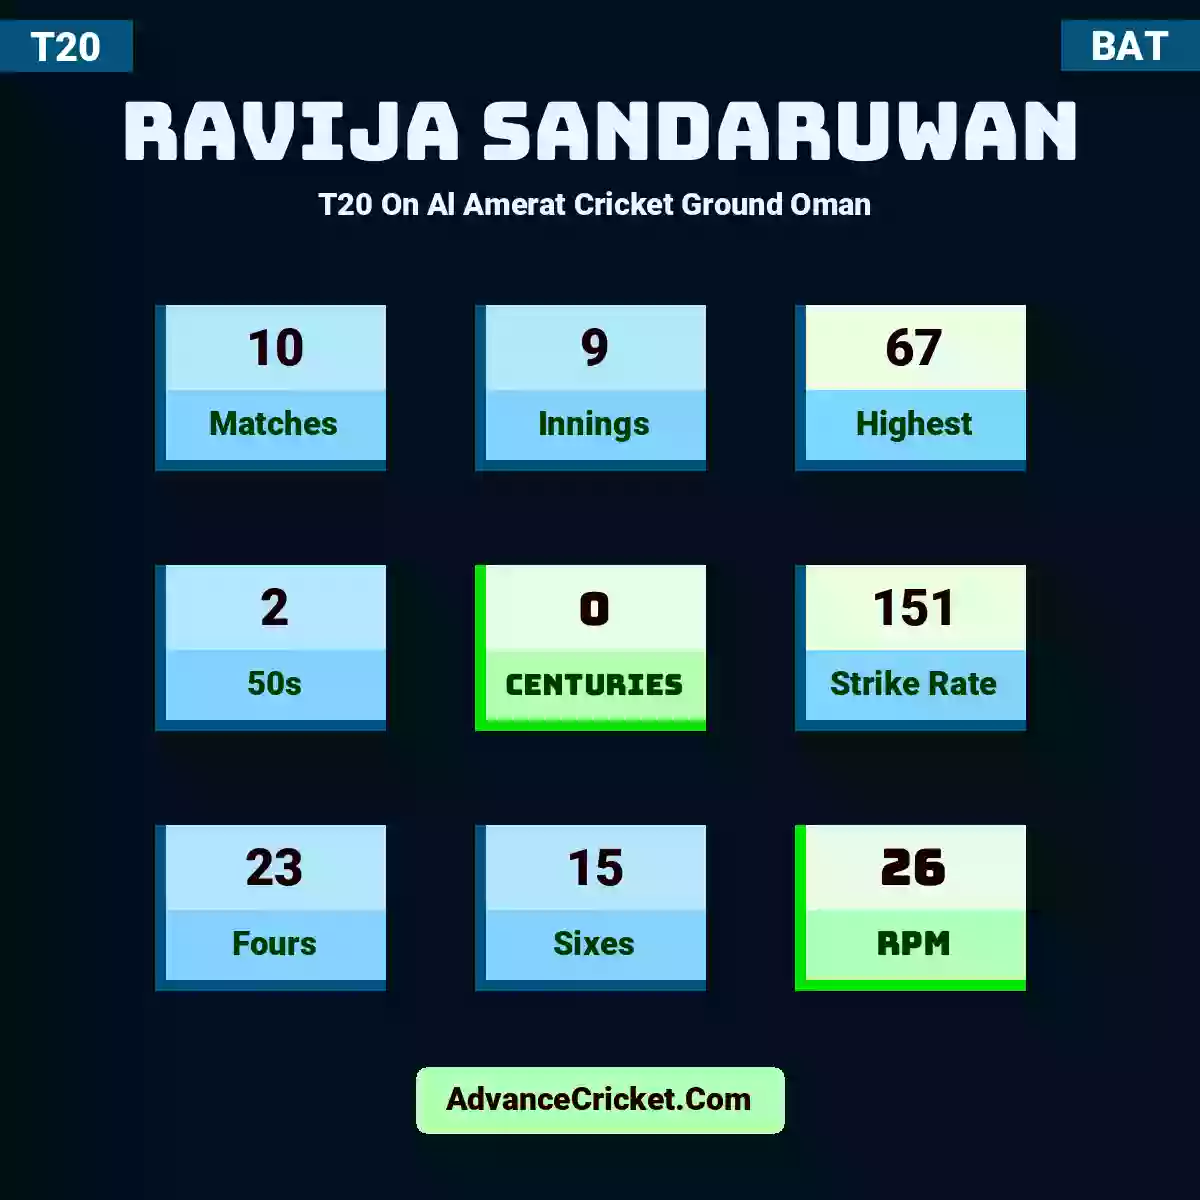 Ravija Sandaruwan T20  On Al Amerat Cricket Ground Oman , Ravija Sandaruwan played 3 matches, scored 84 runs as highest, 1 half-centuries, and 0 centuries, with a strike rate of 177. R.Sandaruwan hit 14 fours and 9 sixes, with an RPM of 46.